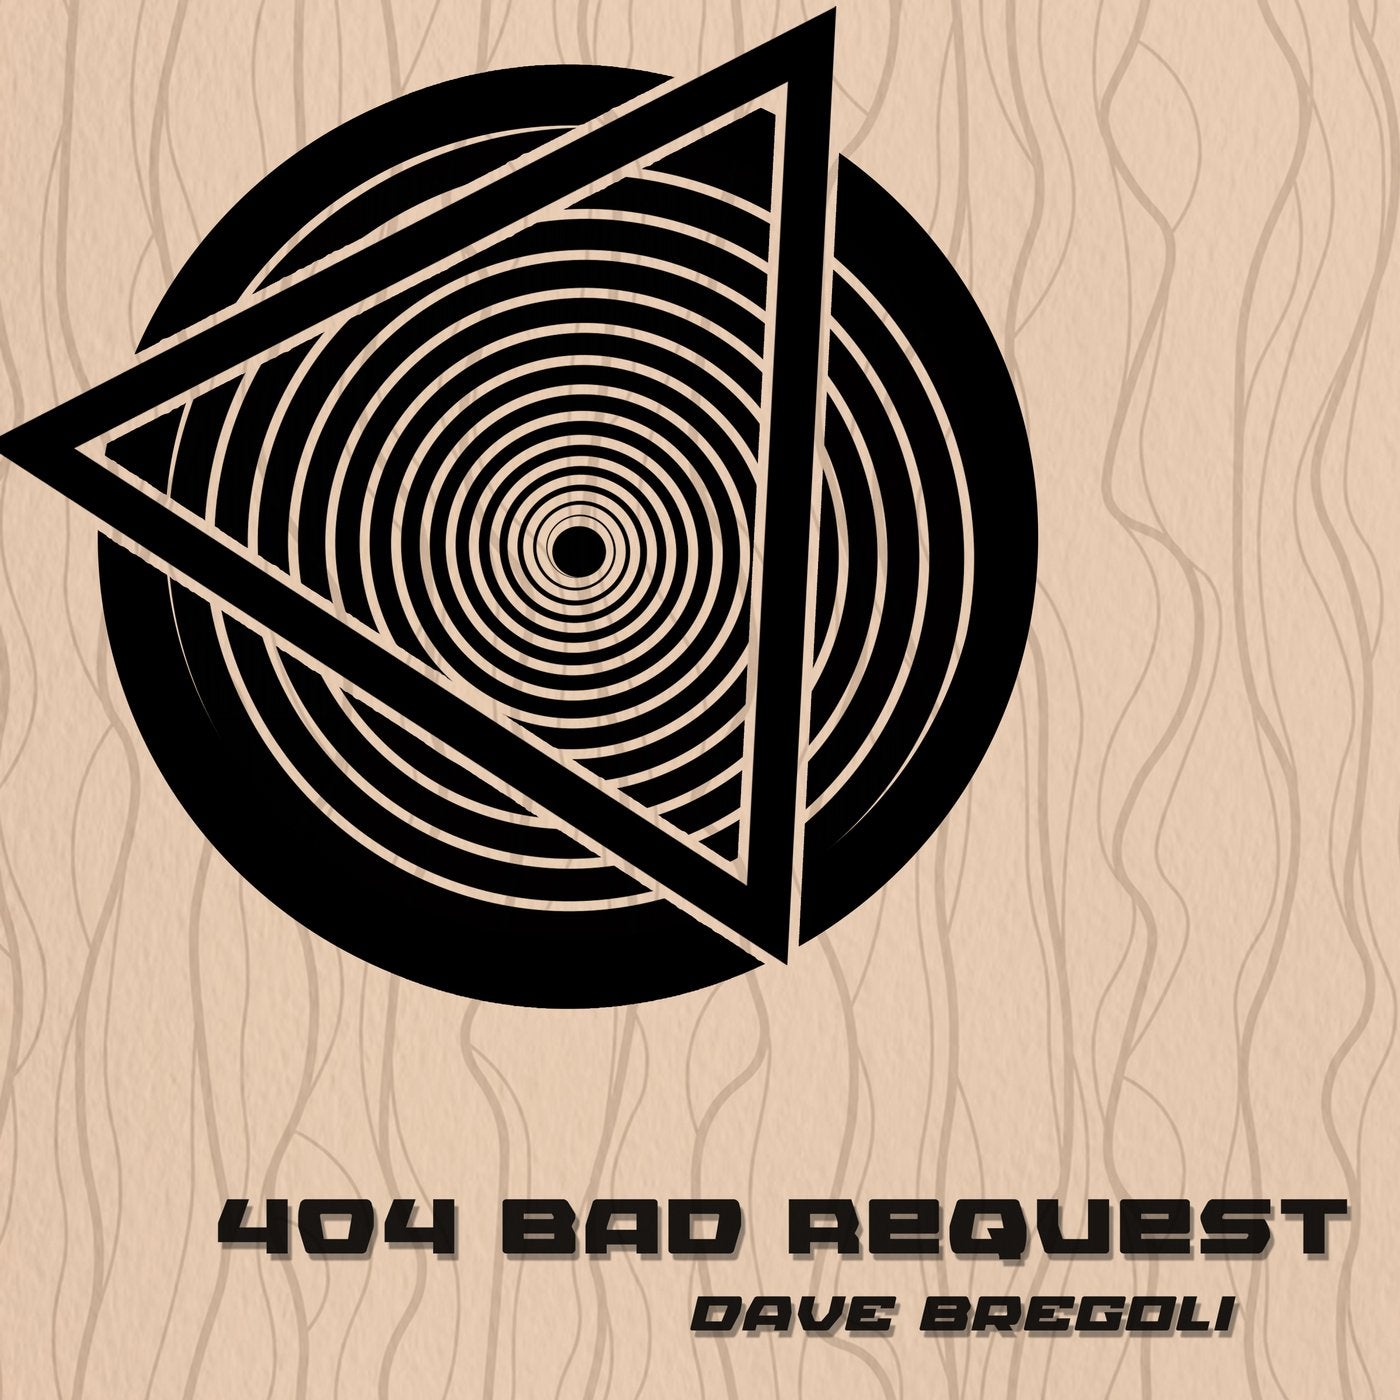 404 Bad Request